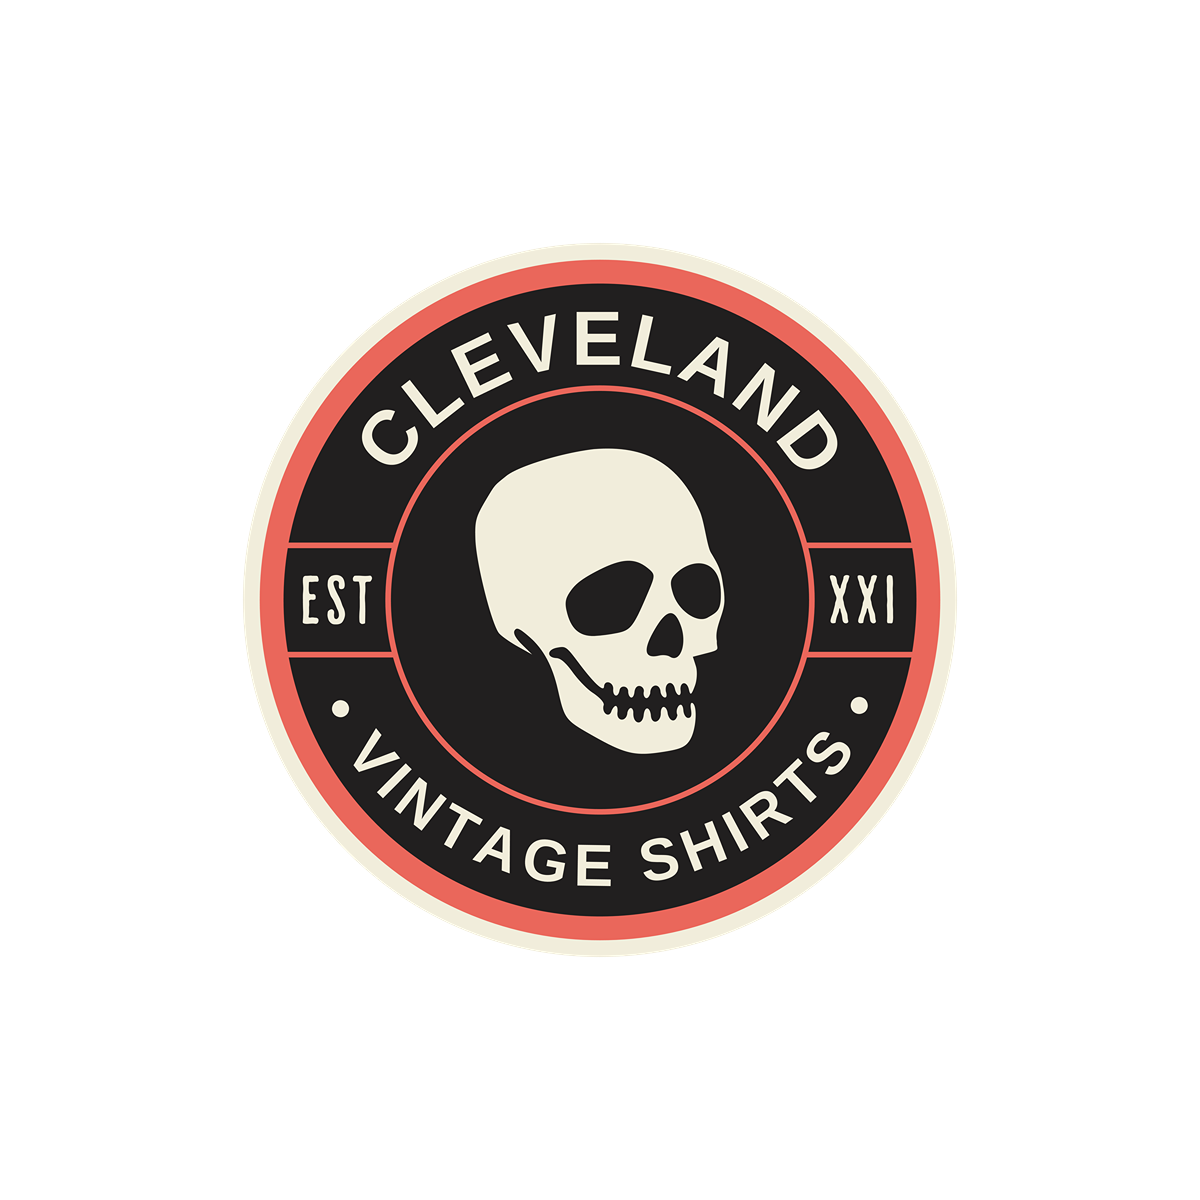 Cleveland Cavaliers Vintage Apparel & Jerseys